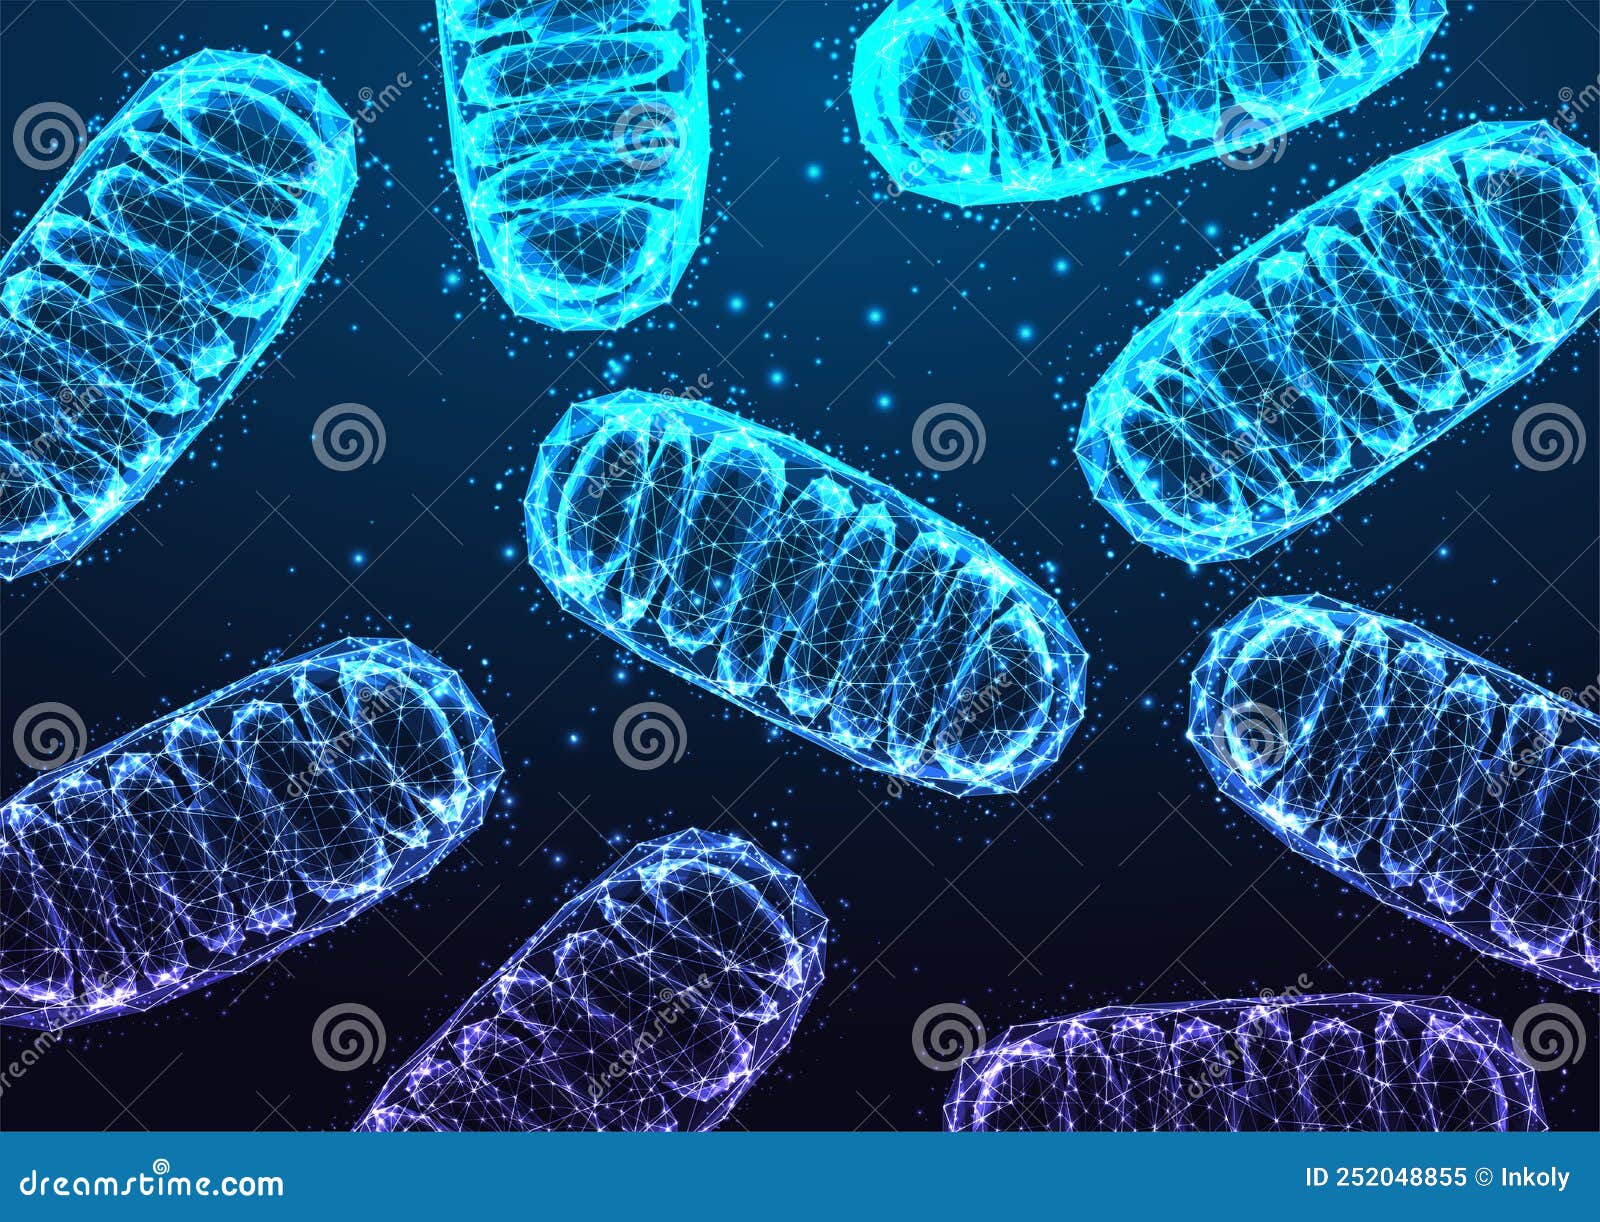 mitochondria under microscope on dark blue backgound in futuristic glowing low polygonal style.